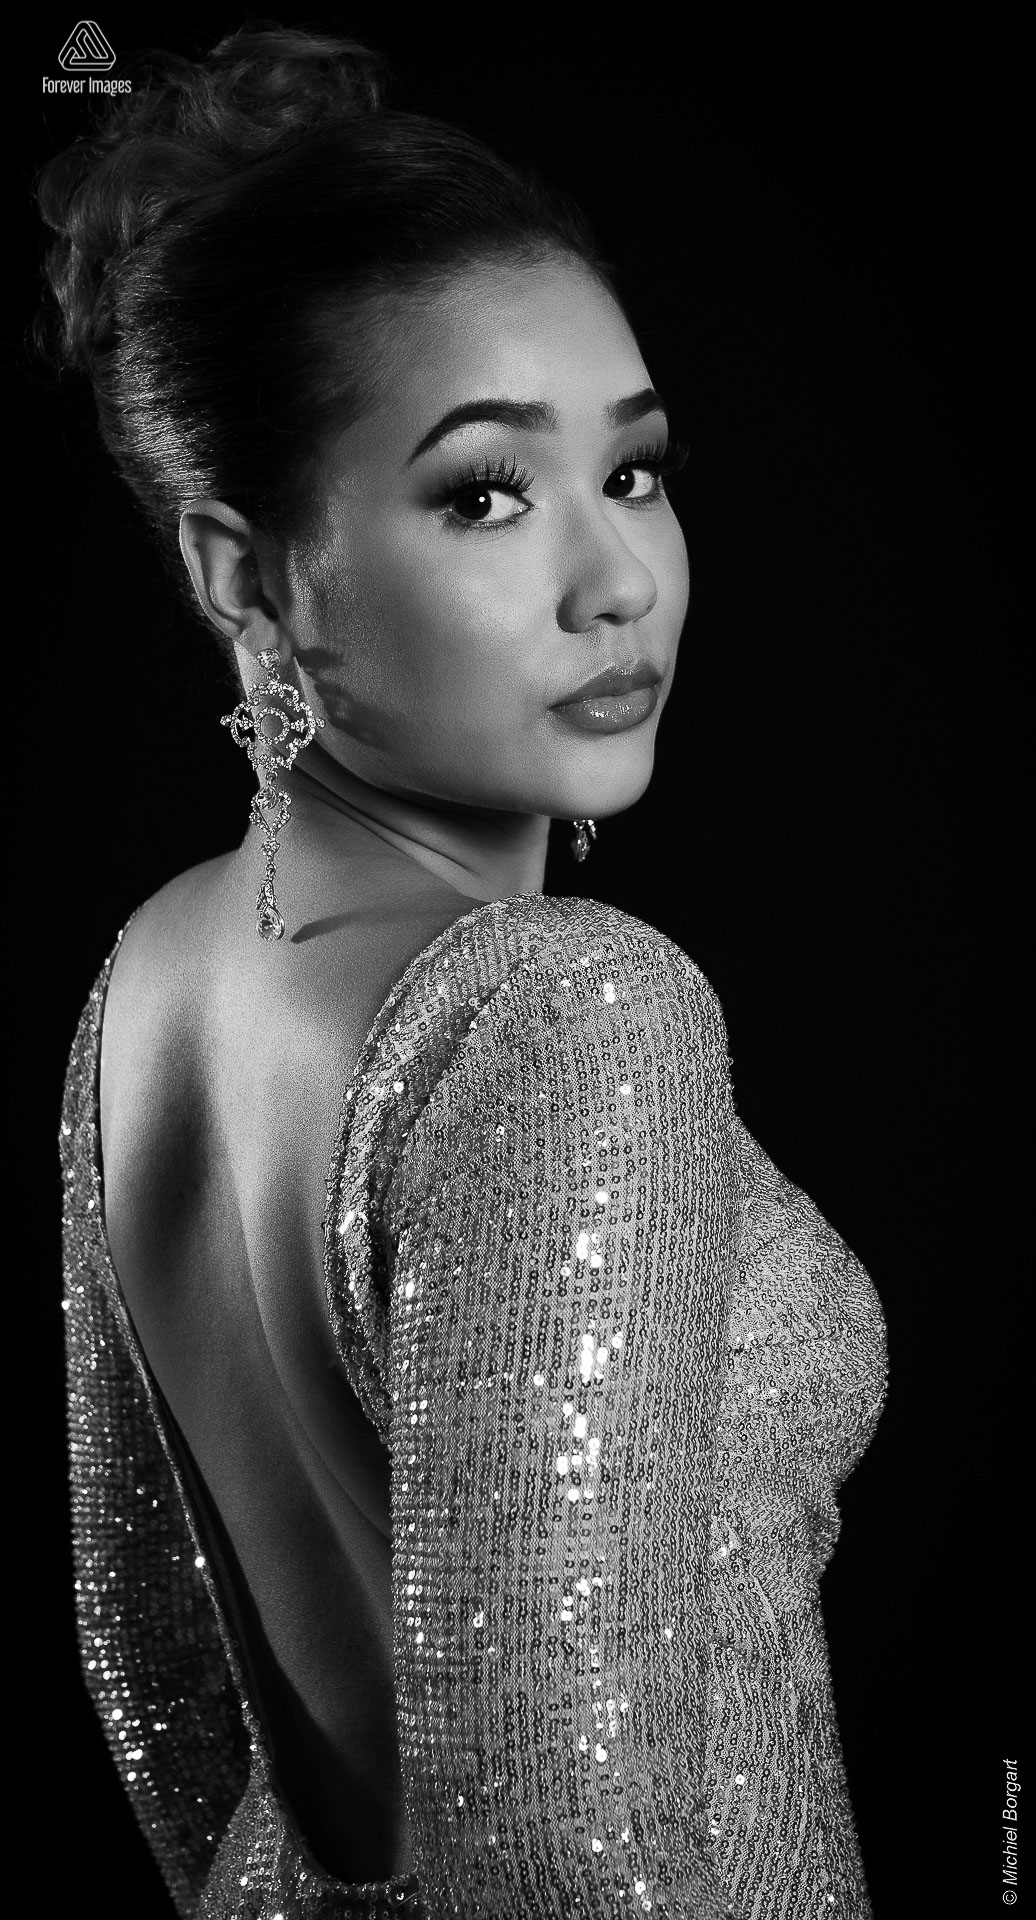 Fashionfoto zwart-wit glitters | Jaimerlee de Meza Miss Eco Aruba Vicky Foundation Lalita Harnem FashCrach | Fashionfotograaf Michiel Borgart - Forever Images.